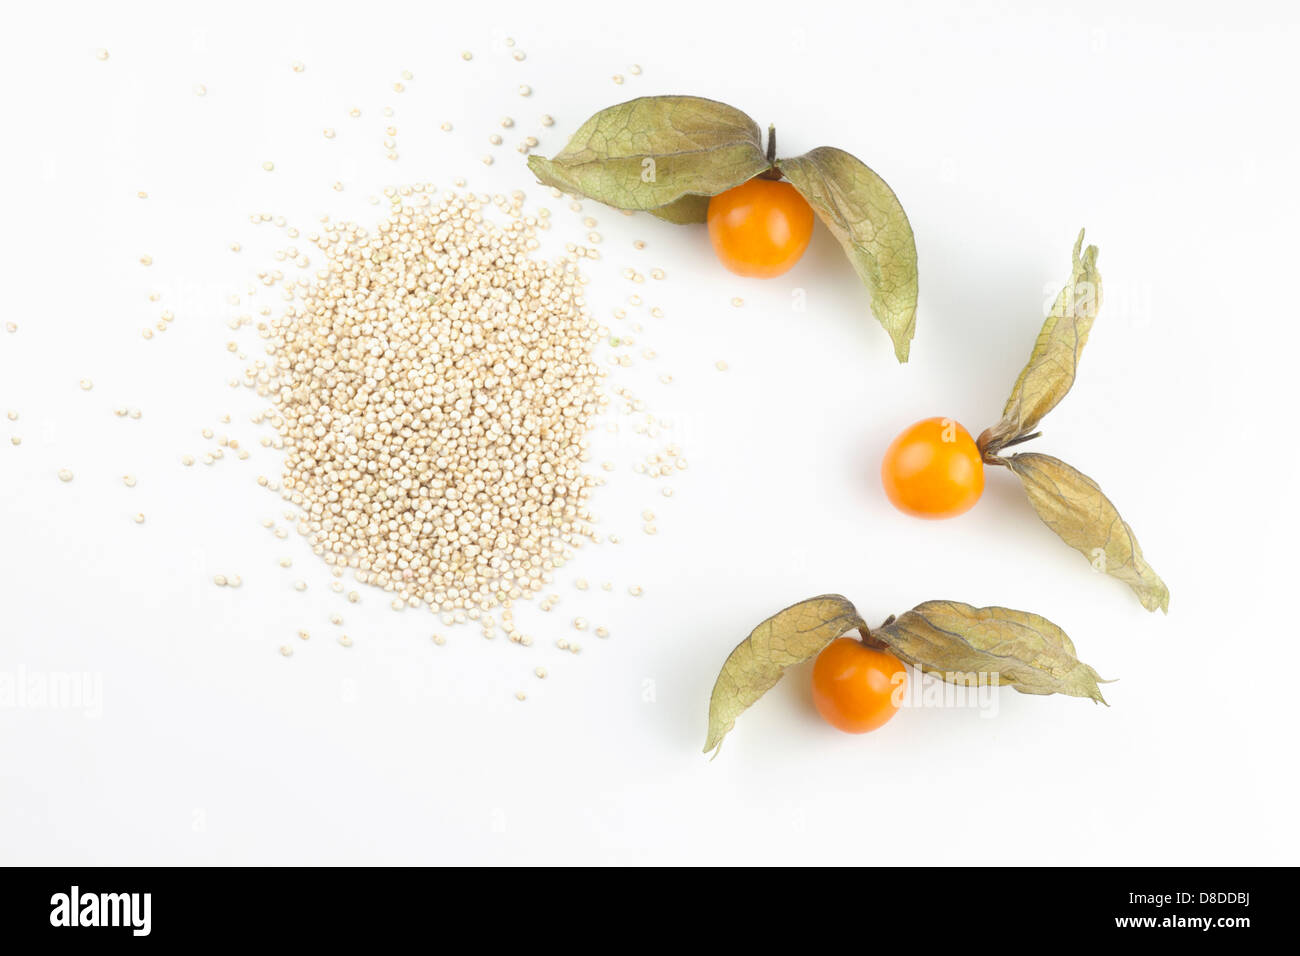 Superpods : quinoa (Chenopodium quinoa) et baies dorées (Physalis peruviana), sur fond blanc Banque D'Images